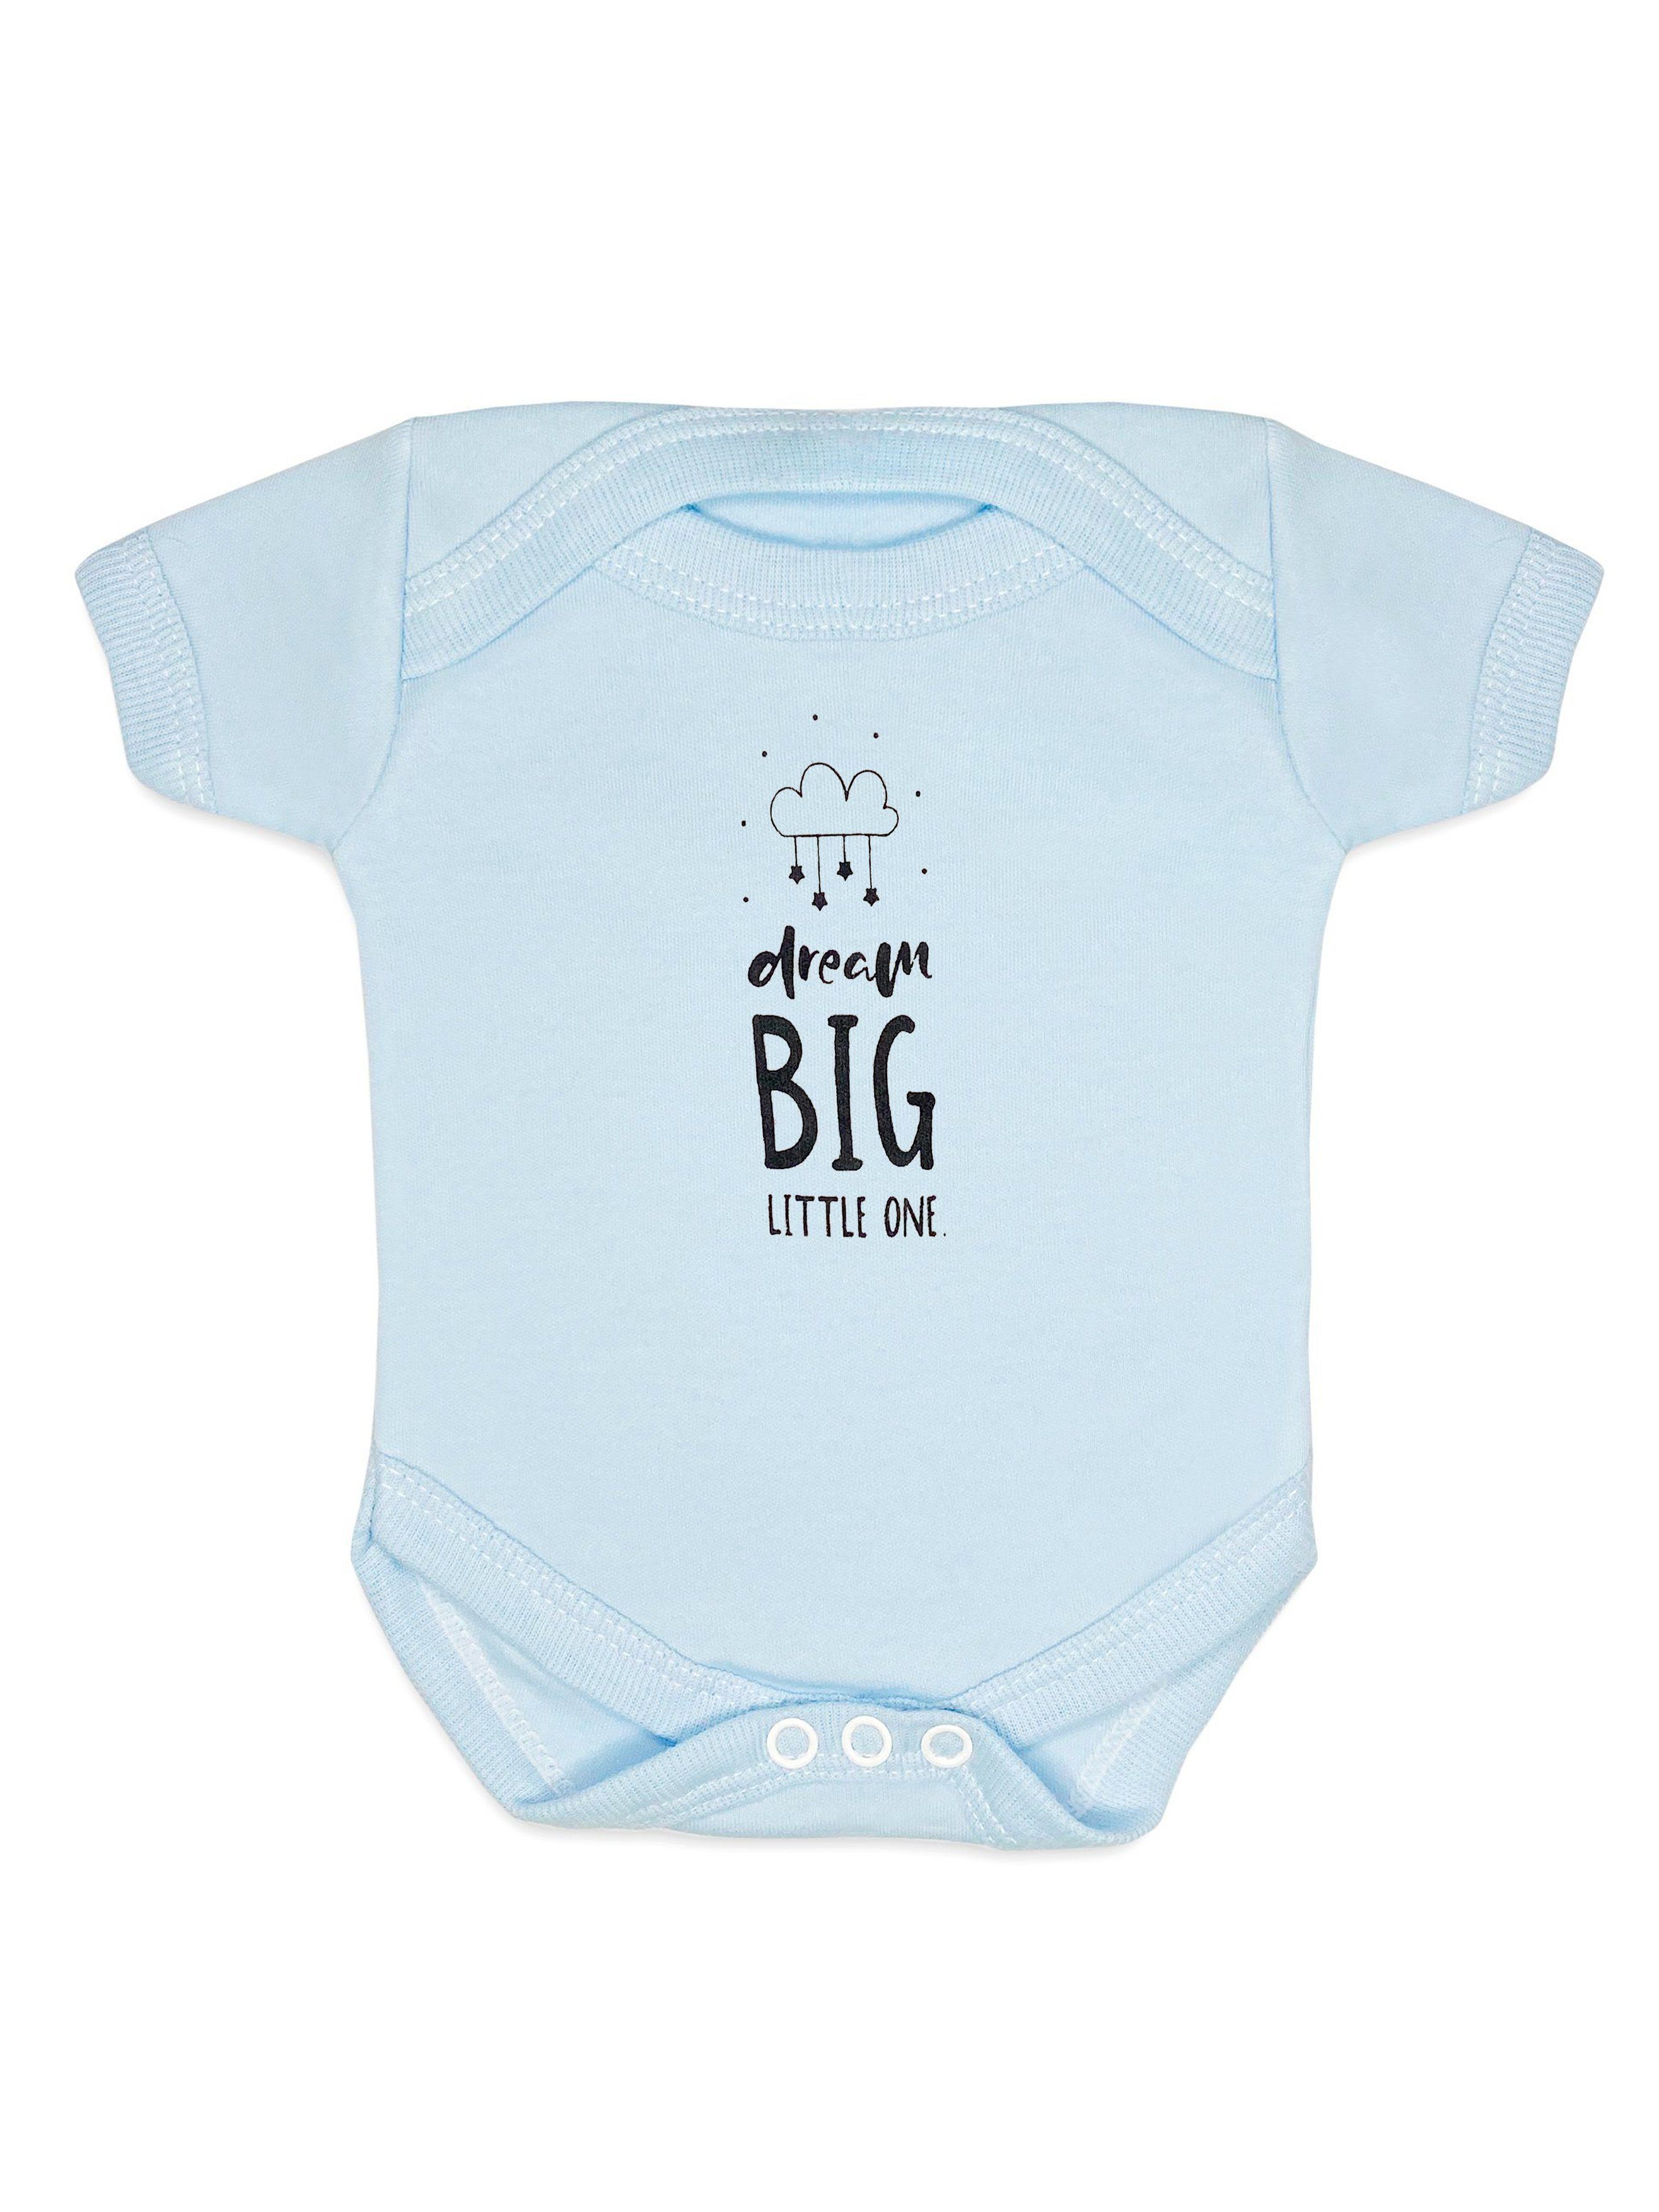 "Dream Big Little One" Bodysuit - Blue Bodysuit / Vest Little Mouse Baby Clothing & Gifts 